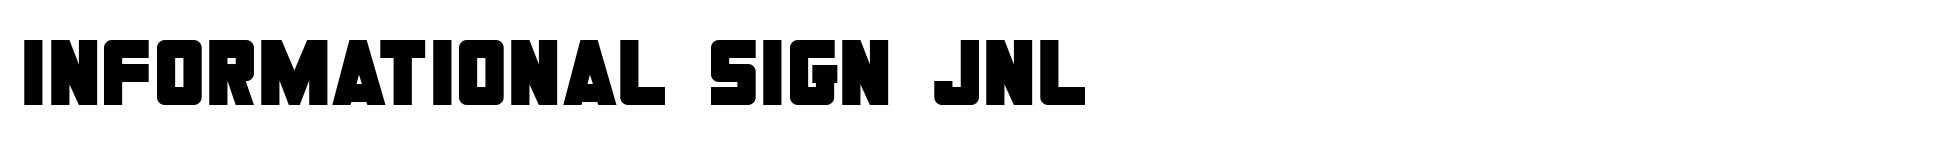 Informational Sign JNL